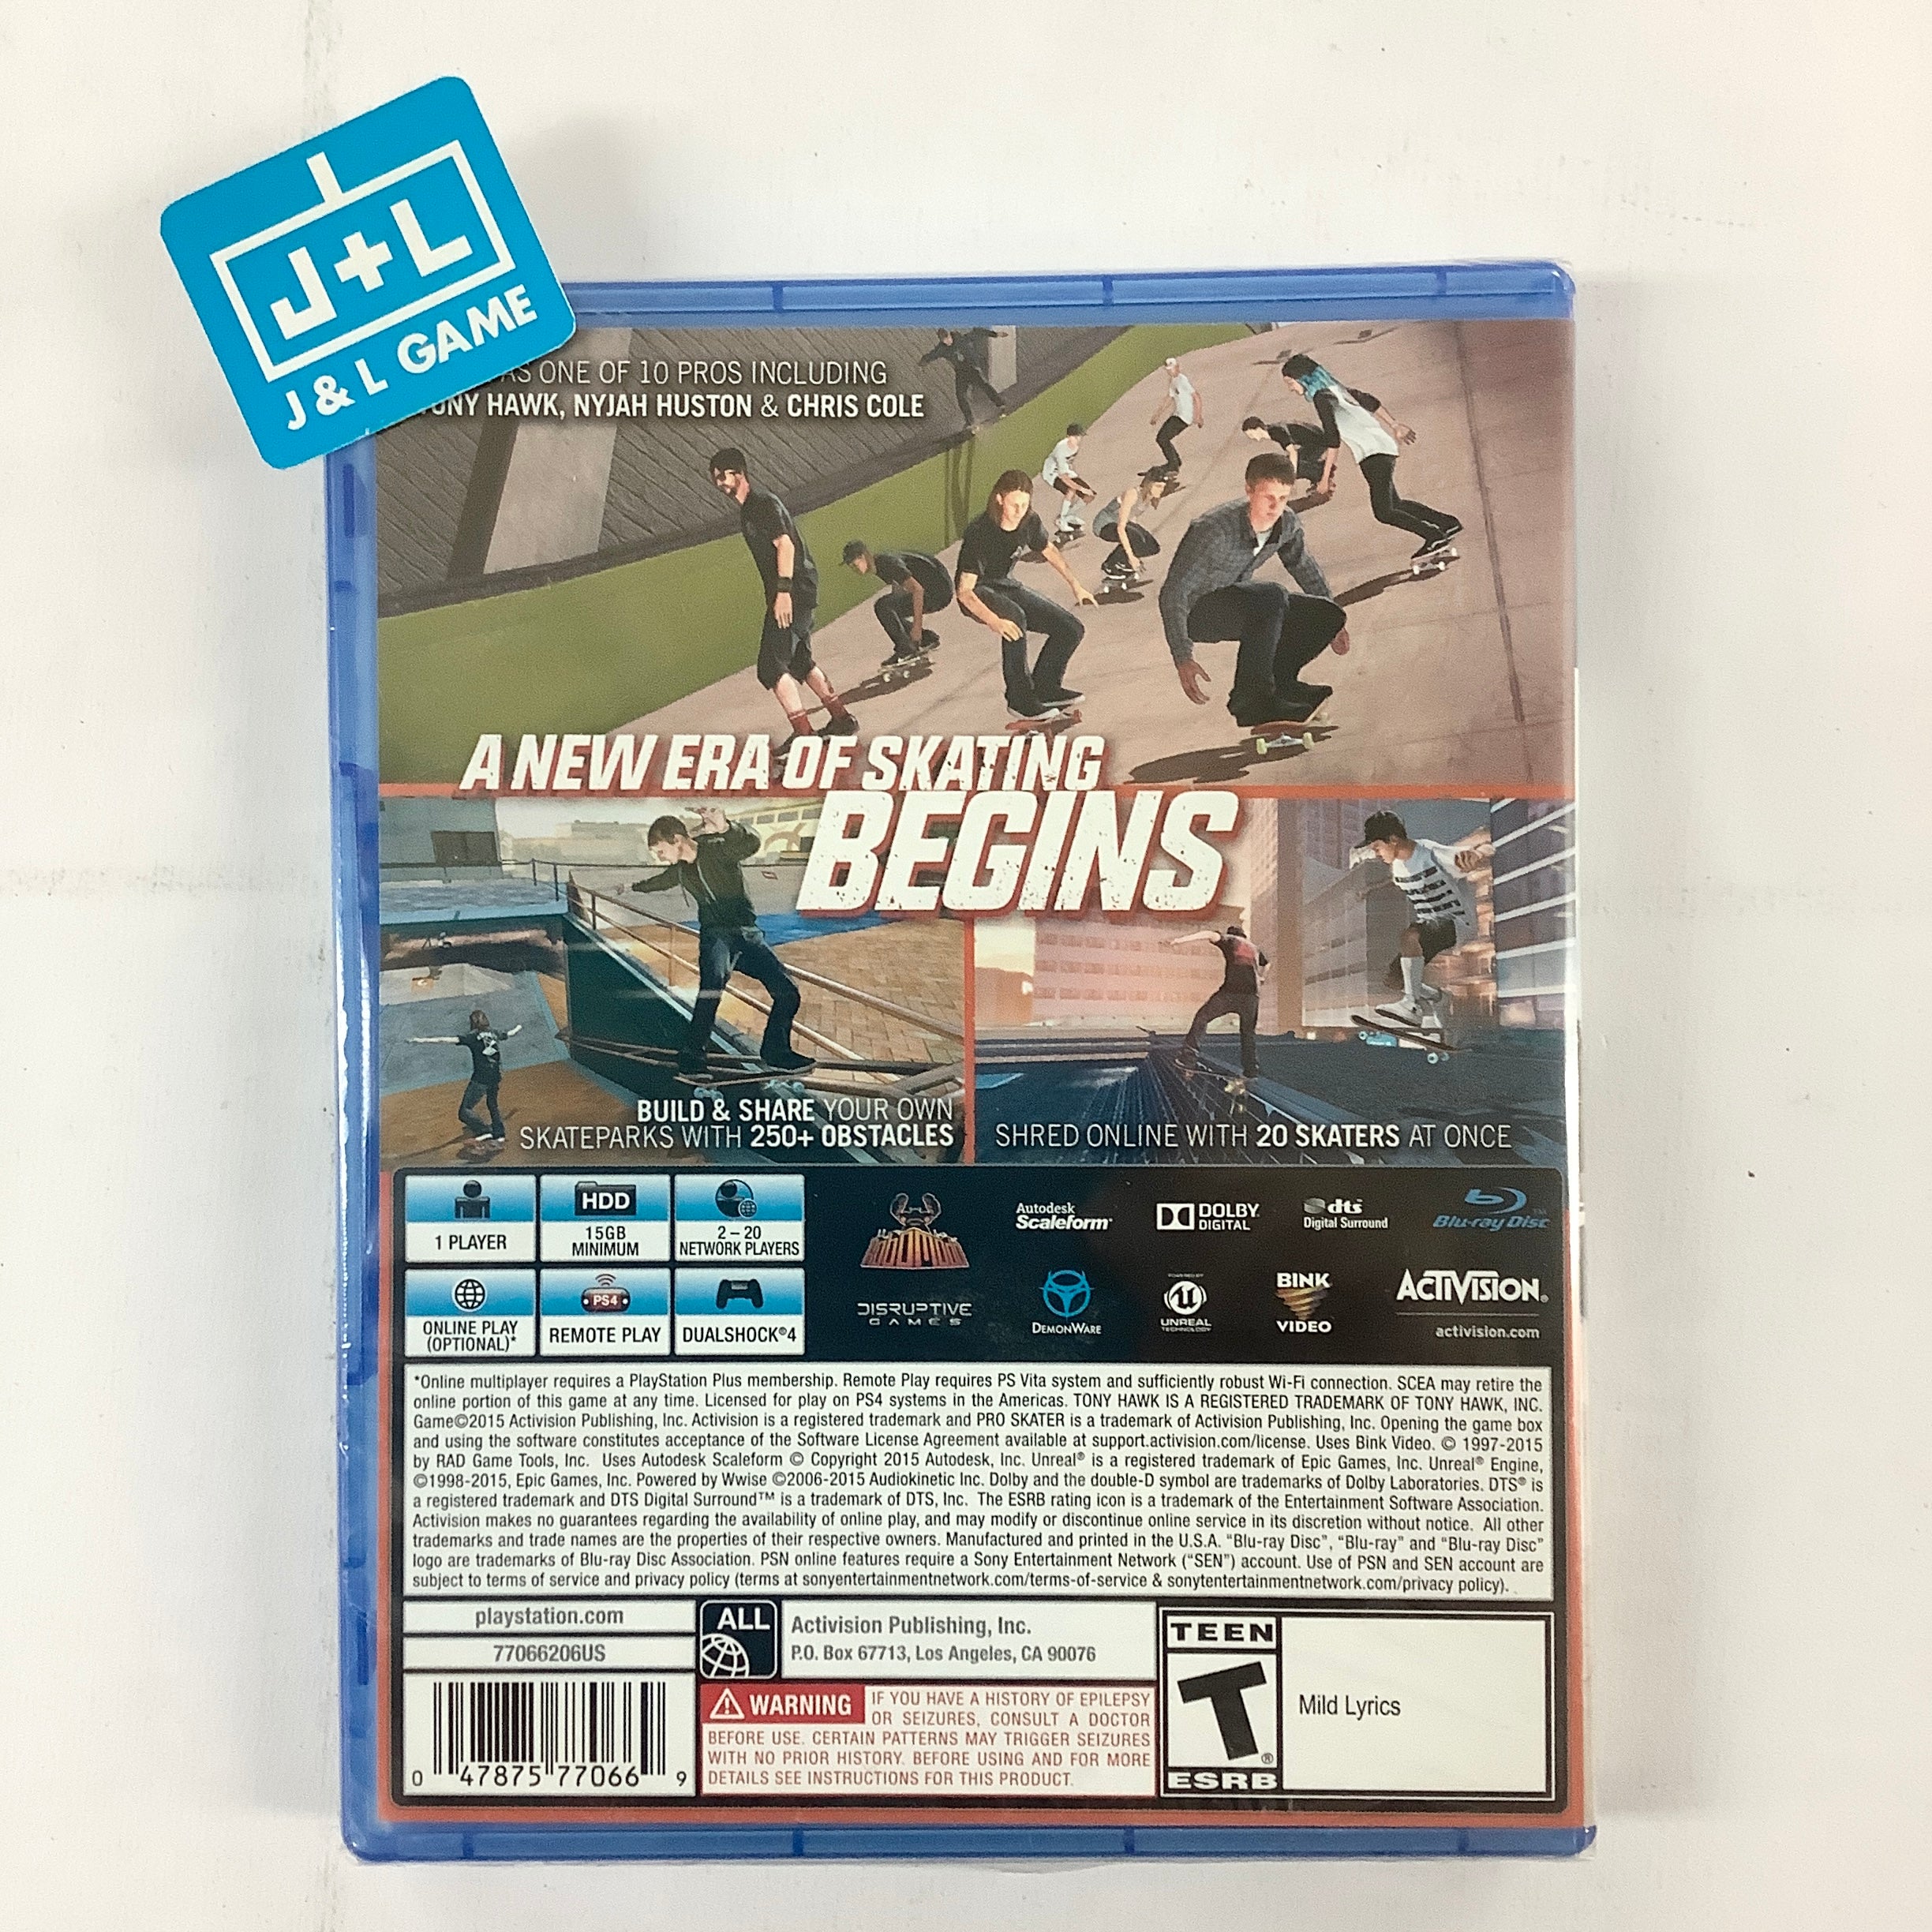 Tony Hawk's Pro Skater 5 - (PS4) PlayStation 4 Video Games Activision   